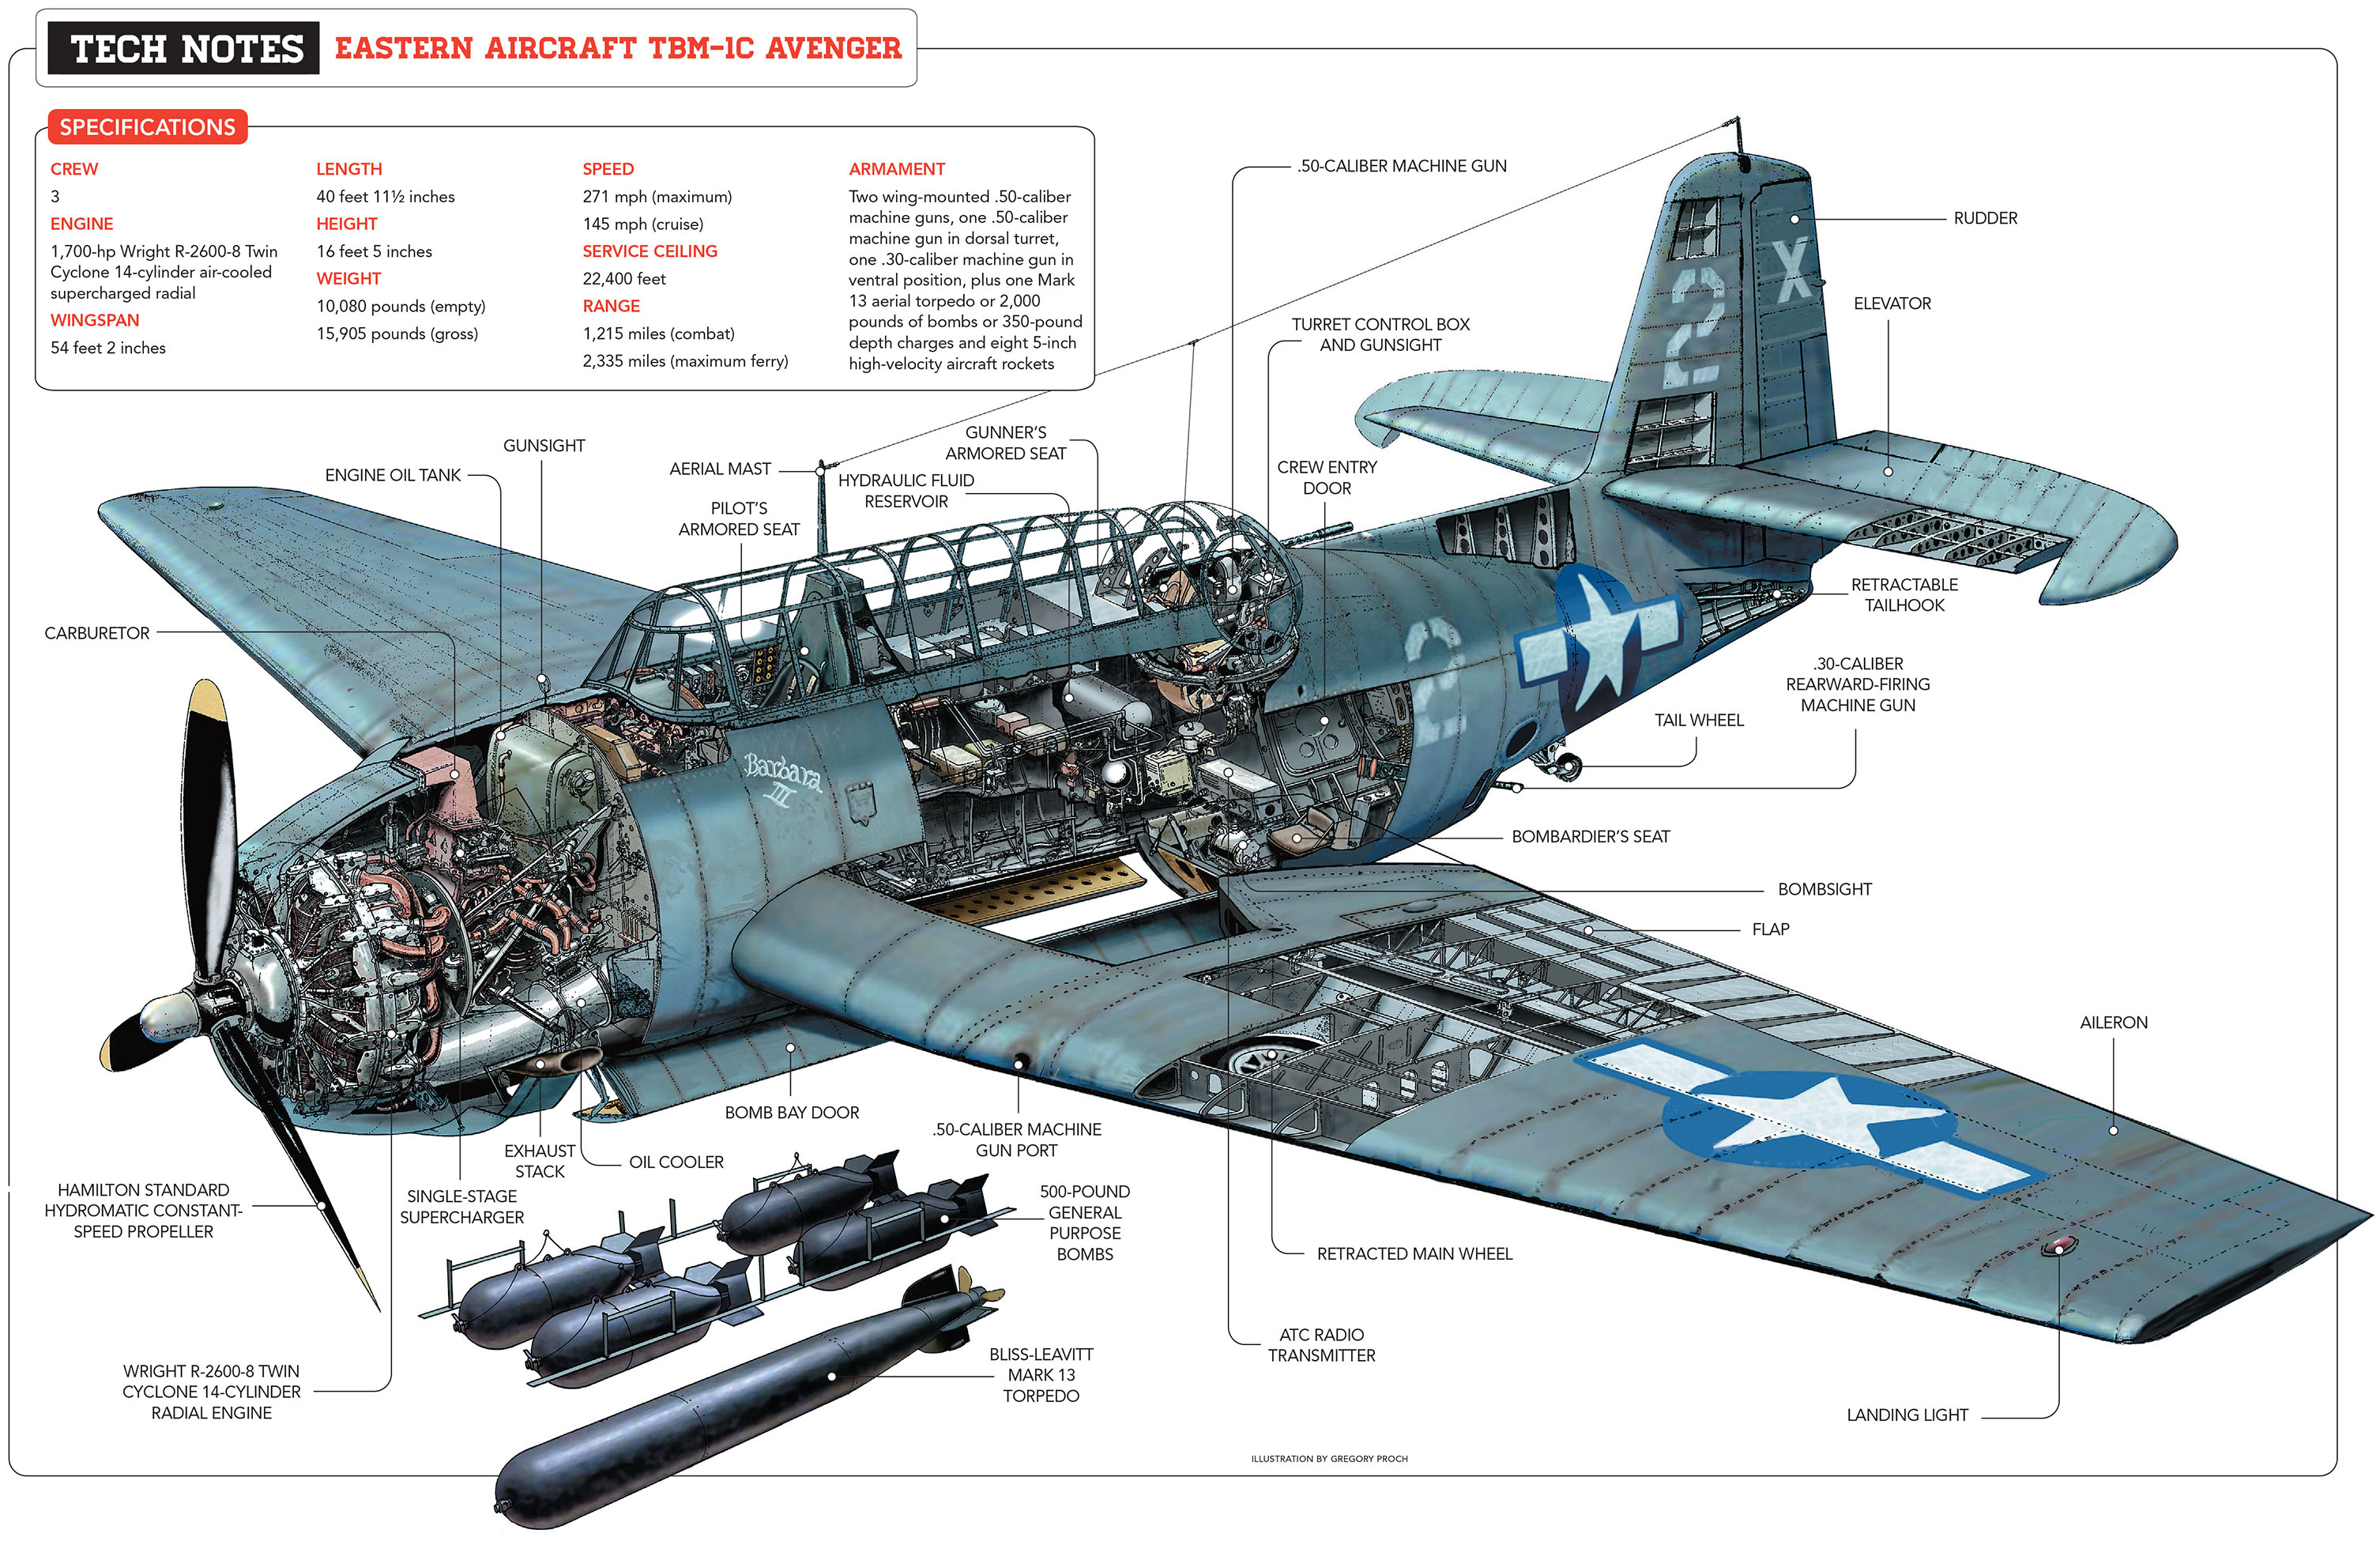 [Photo] Cutaway view of the TBM-1c Avenger. | World War II Database